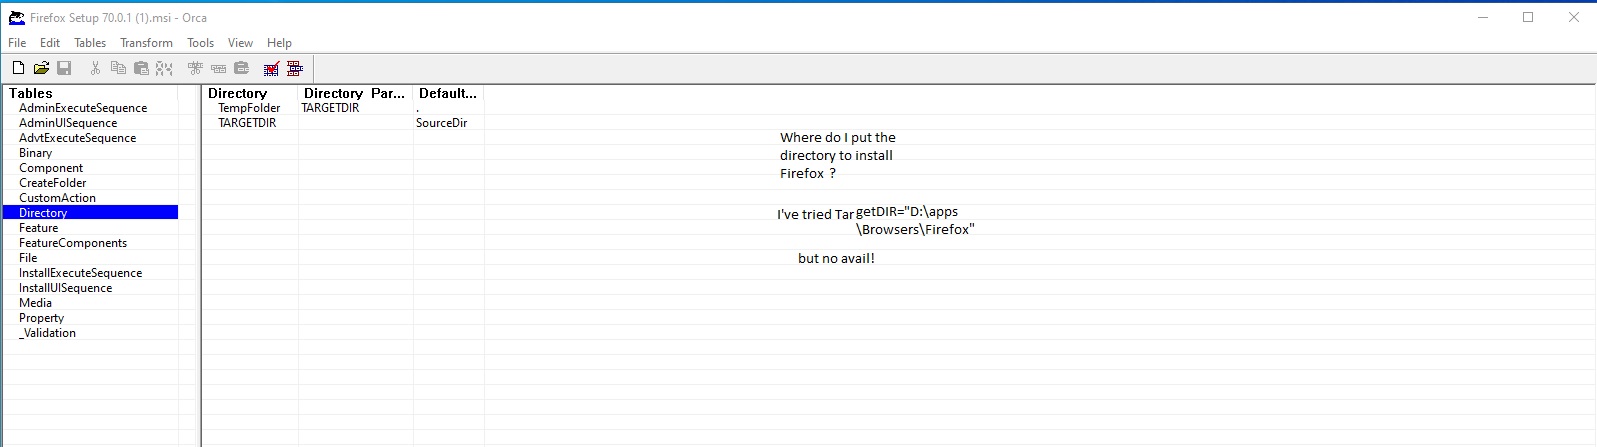 CHange default installation directory in msi file using ORCA 8dcf2a0c-8d31-424d-a9f4-a58fa604042f?upload=true.jpg